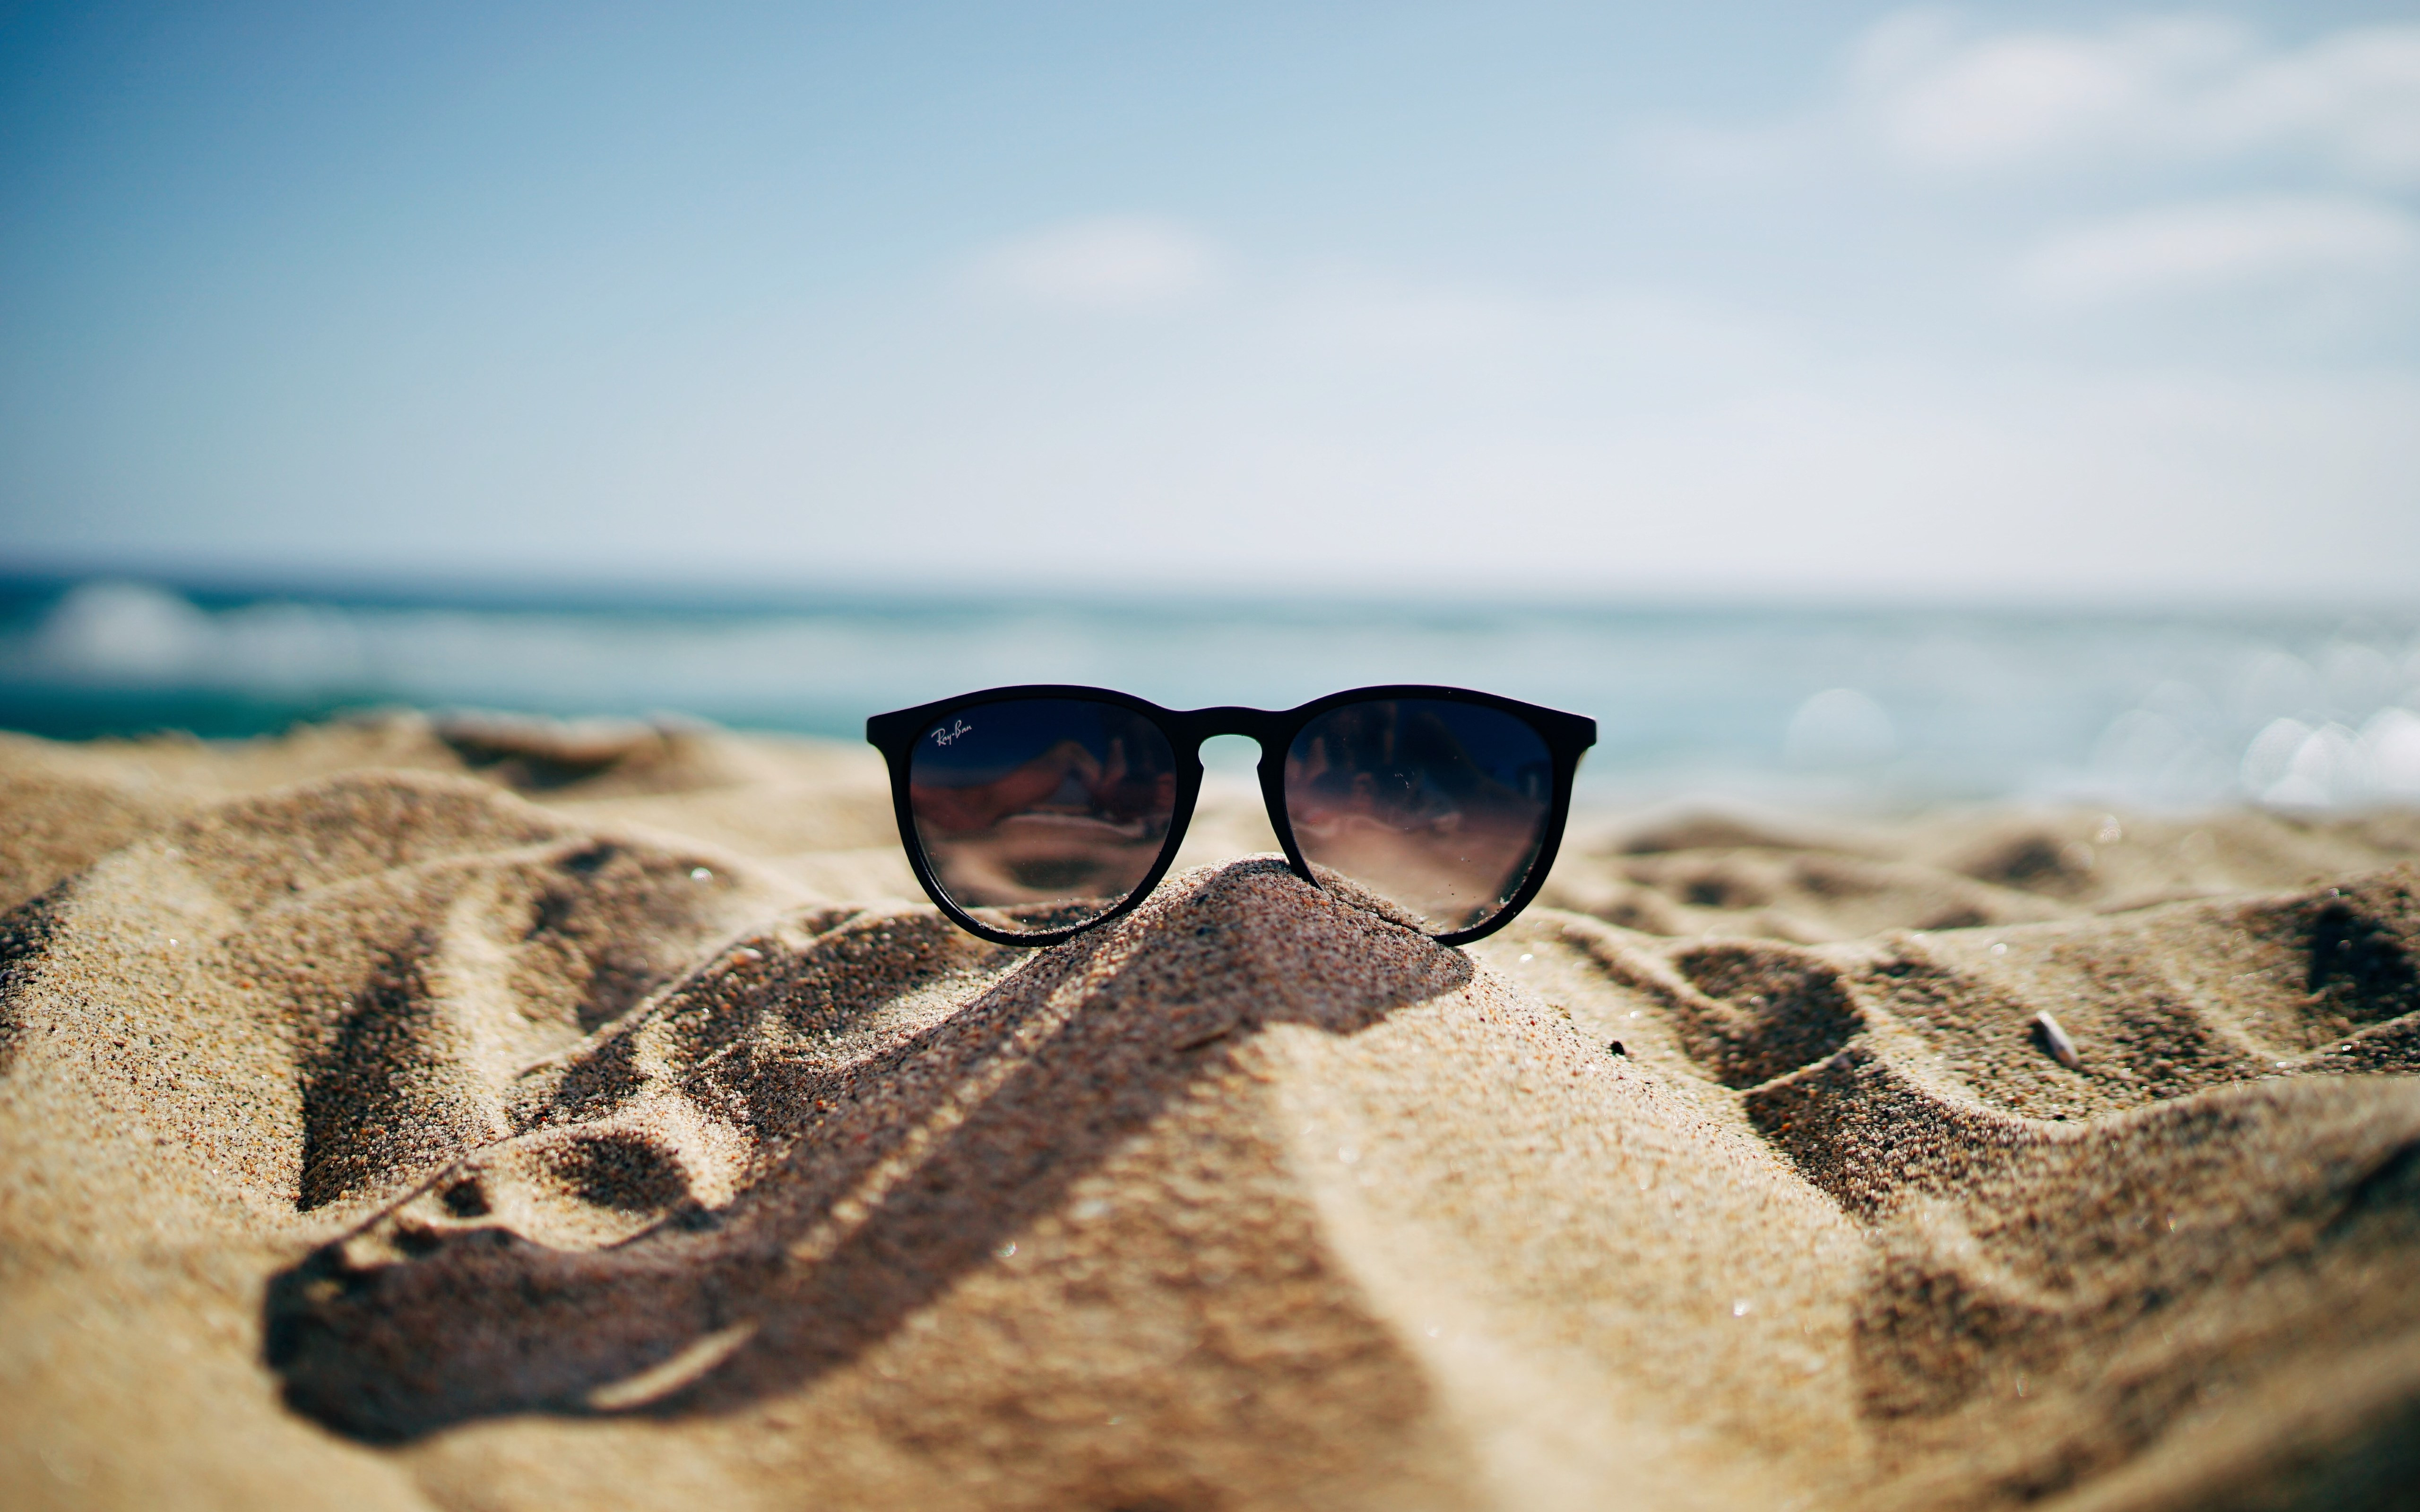 Ray Ban sunglasses on hot sand beach wallpaper 5120x3200